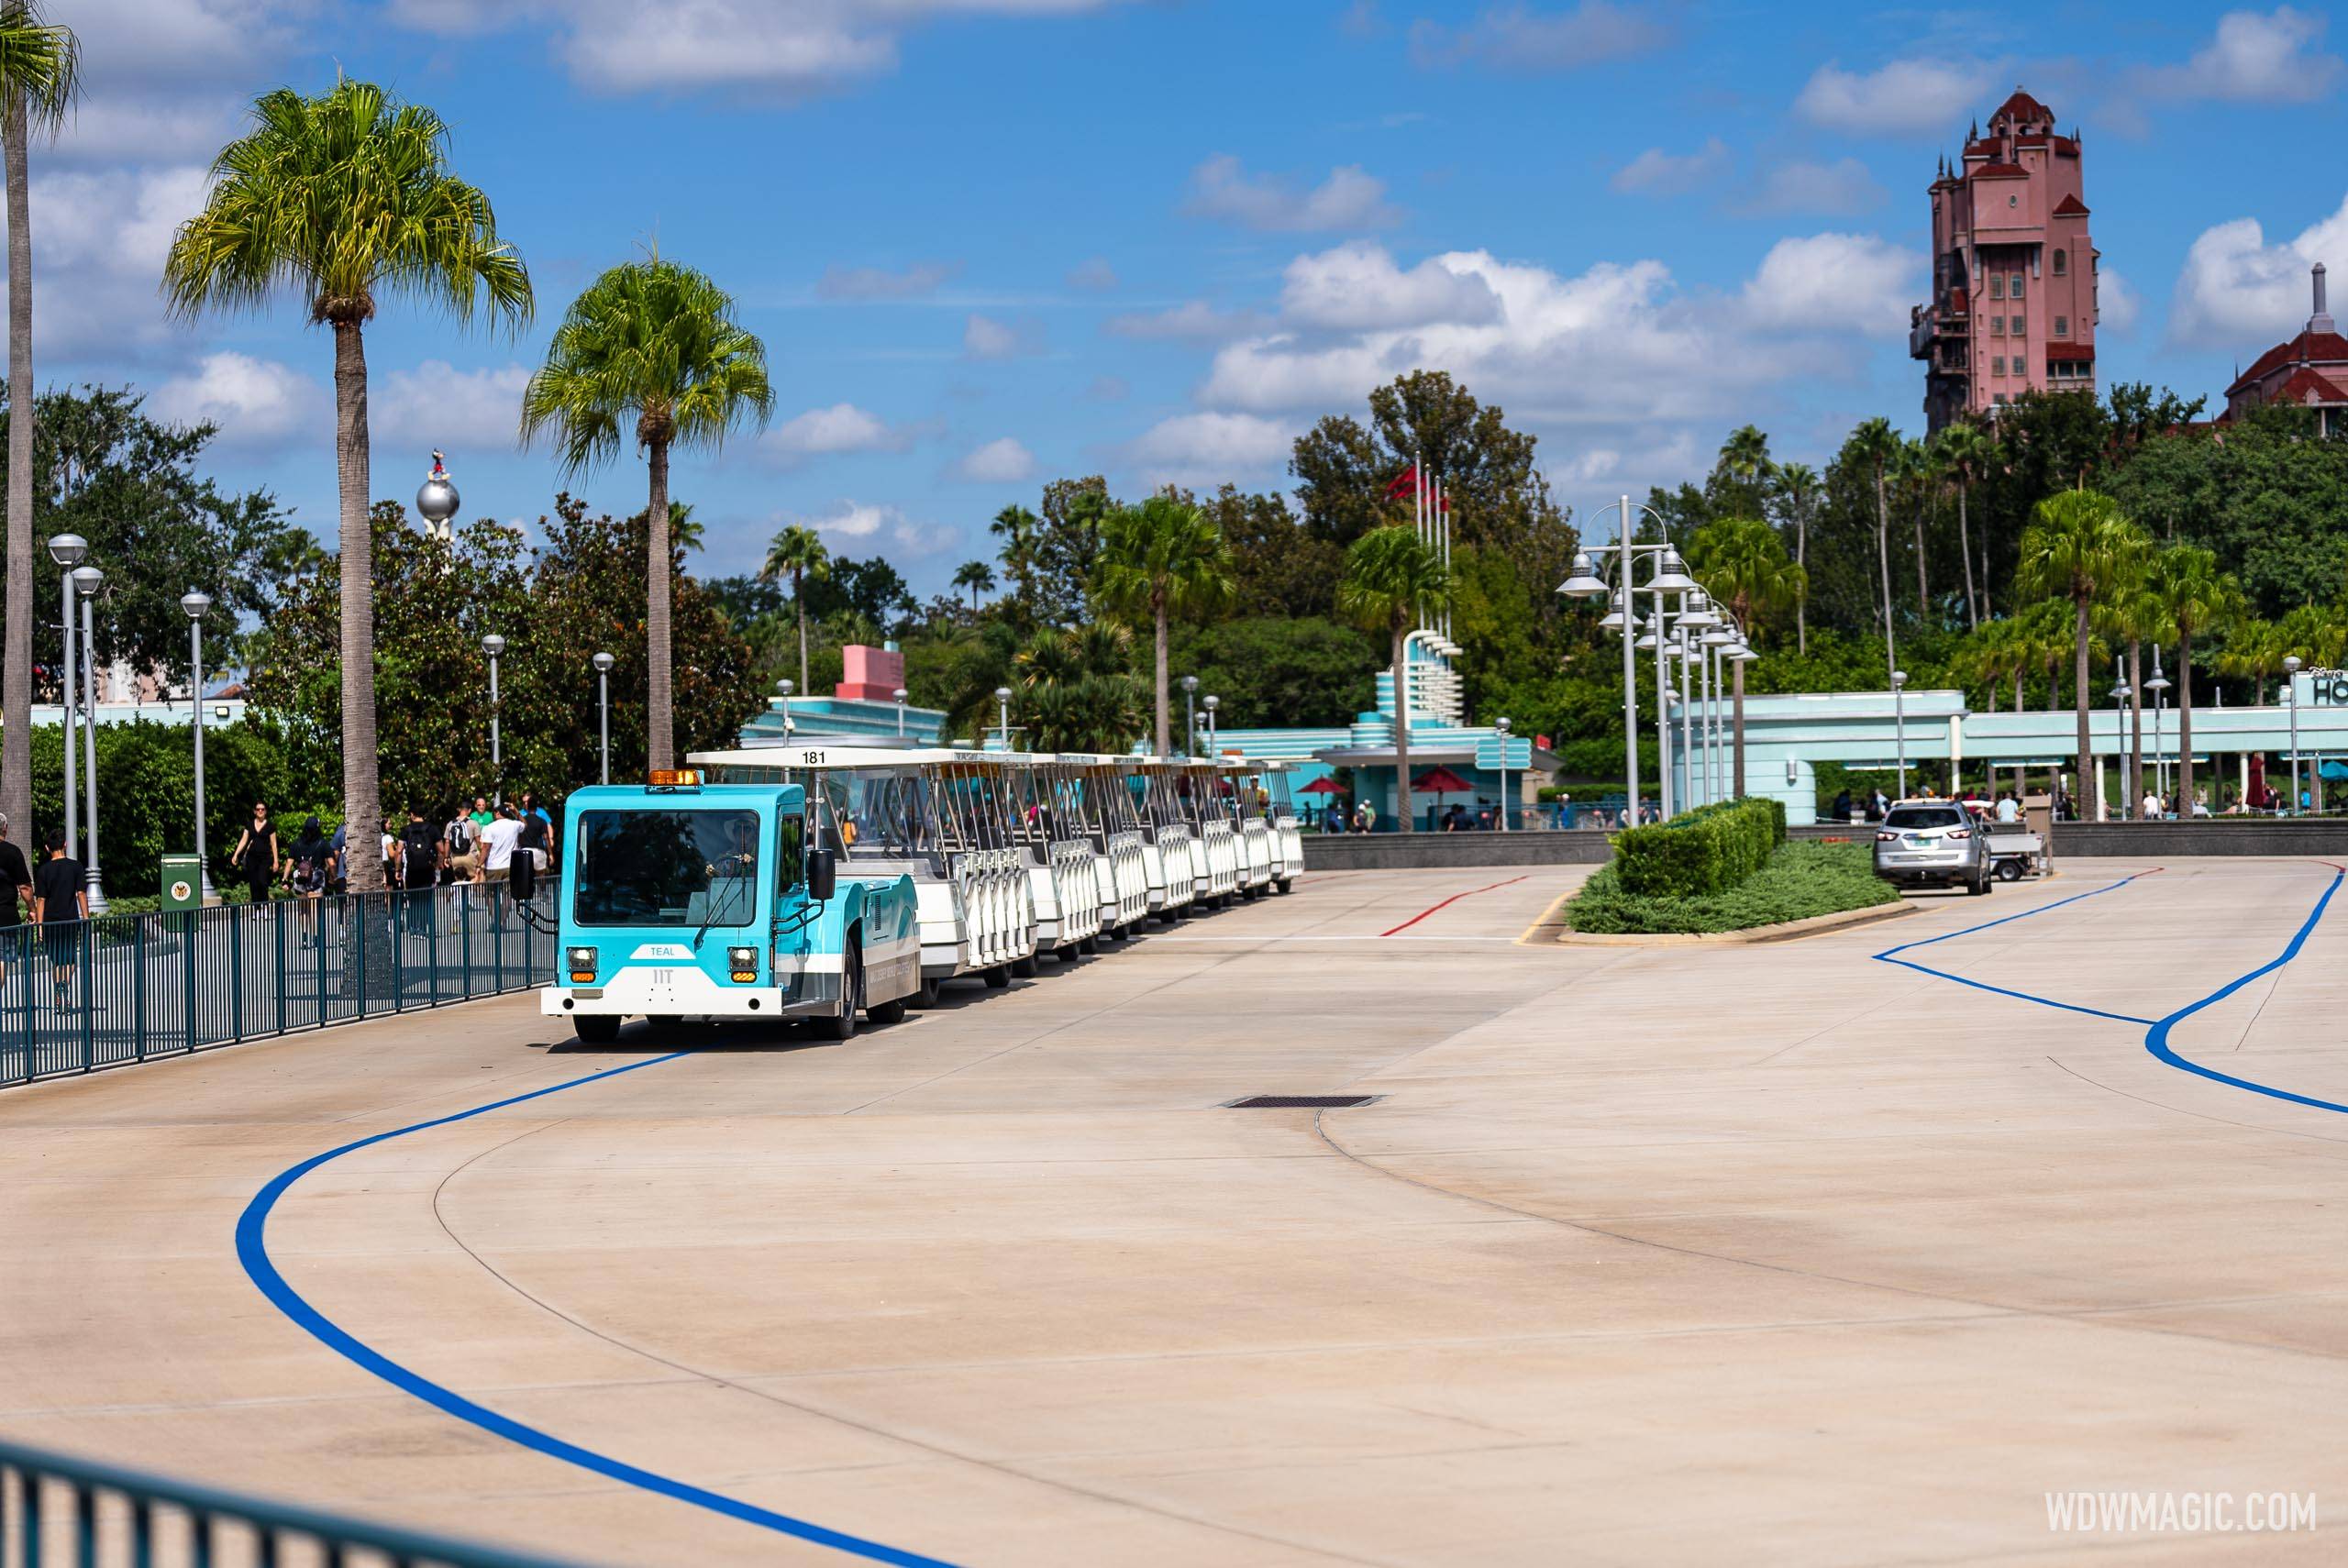 Disney's Hollywood Studios Tram returns to service